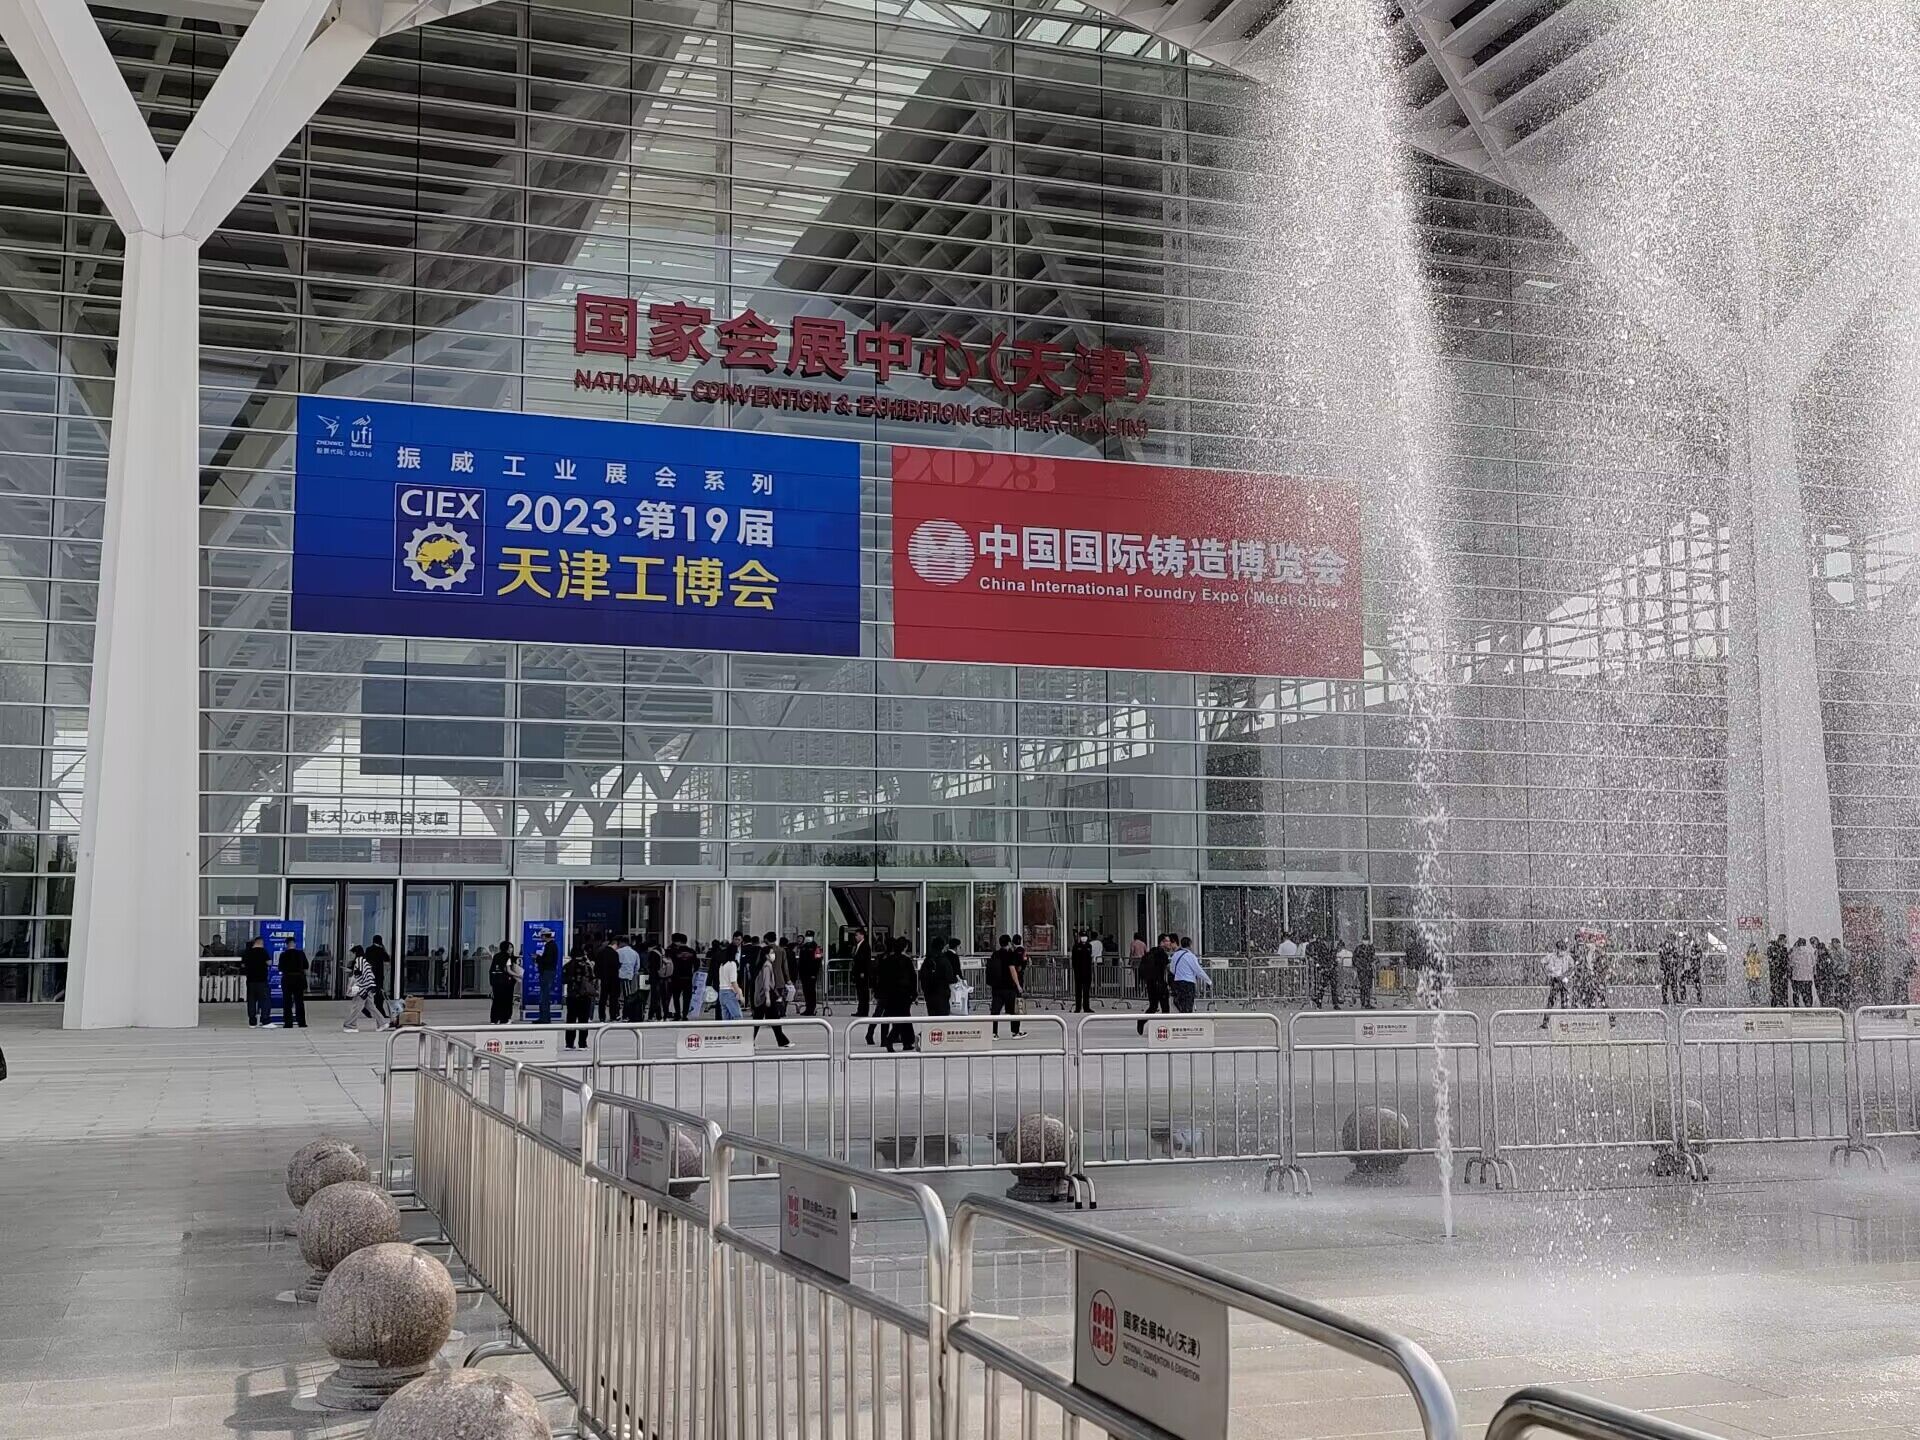 2023 China International Foundry Exposition